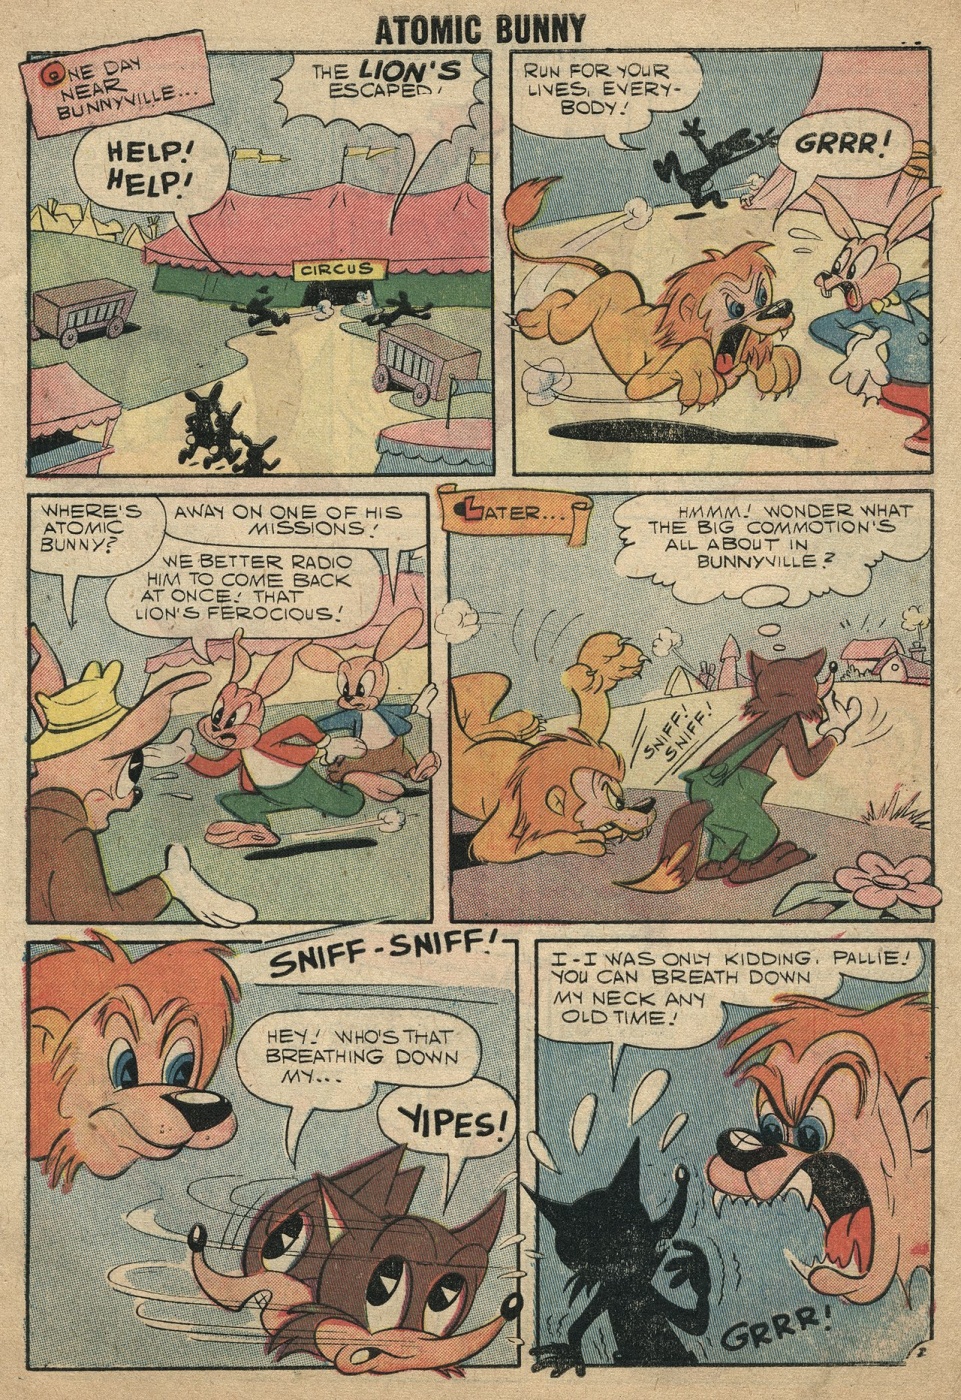 Atomic-Bunny-Comic-Strips (27)